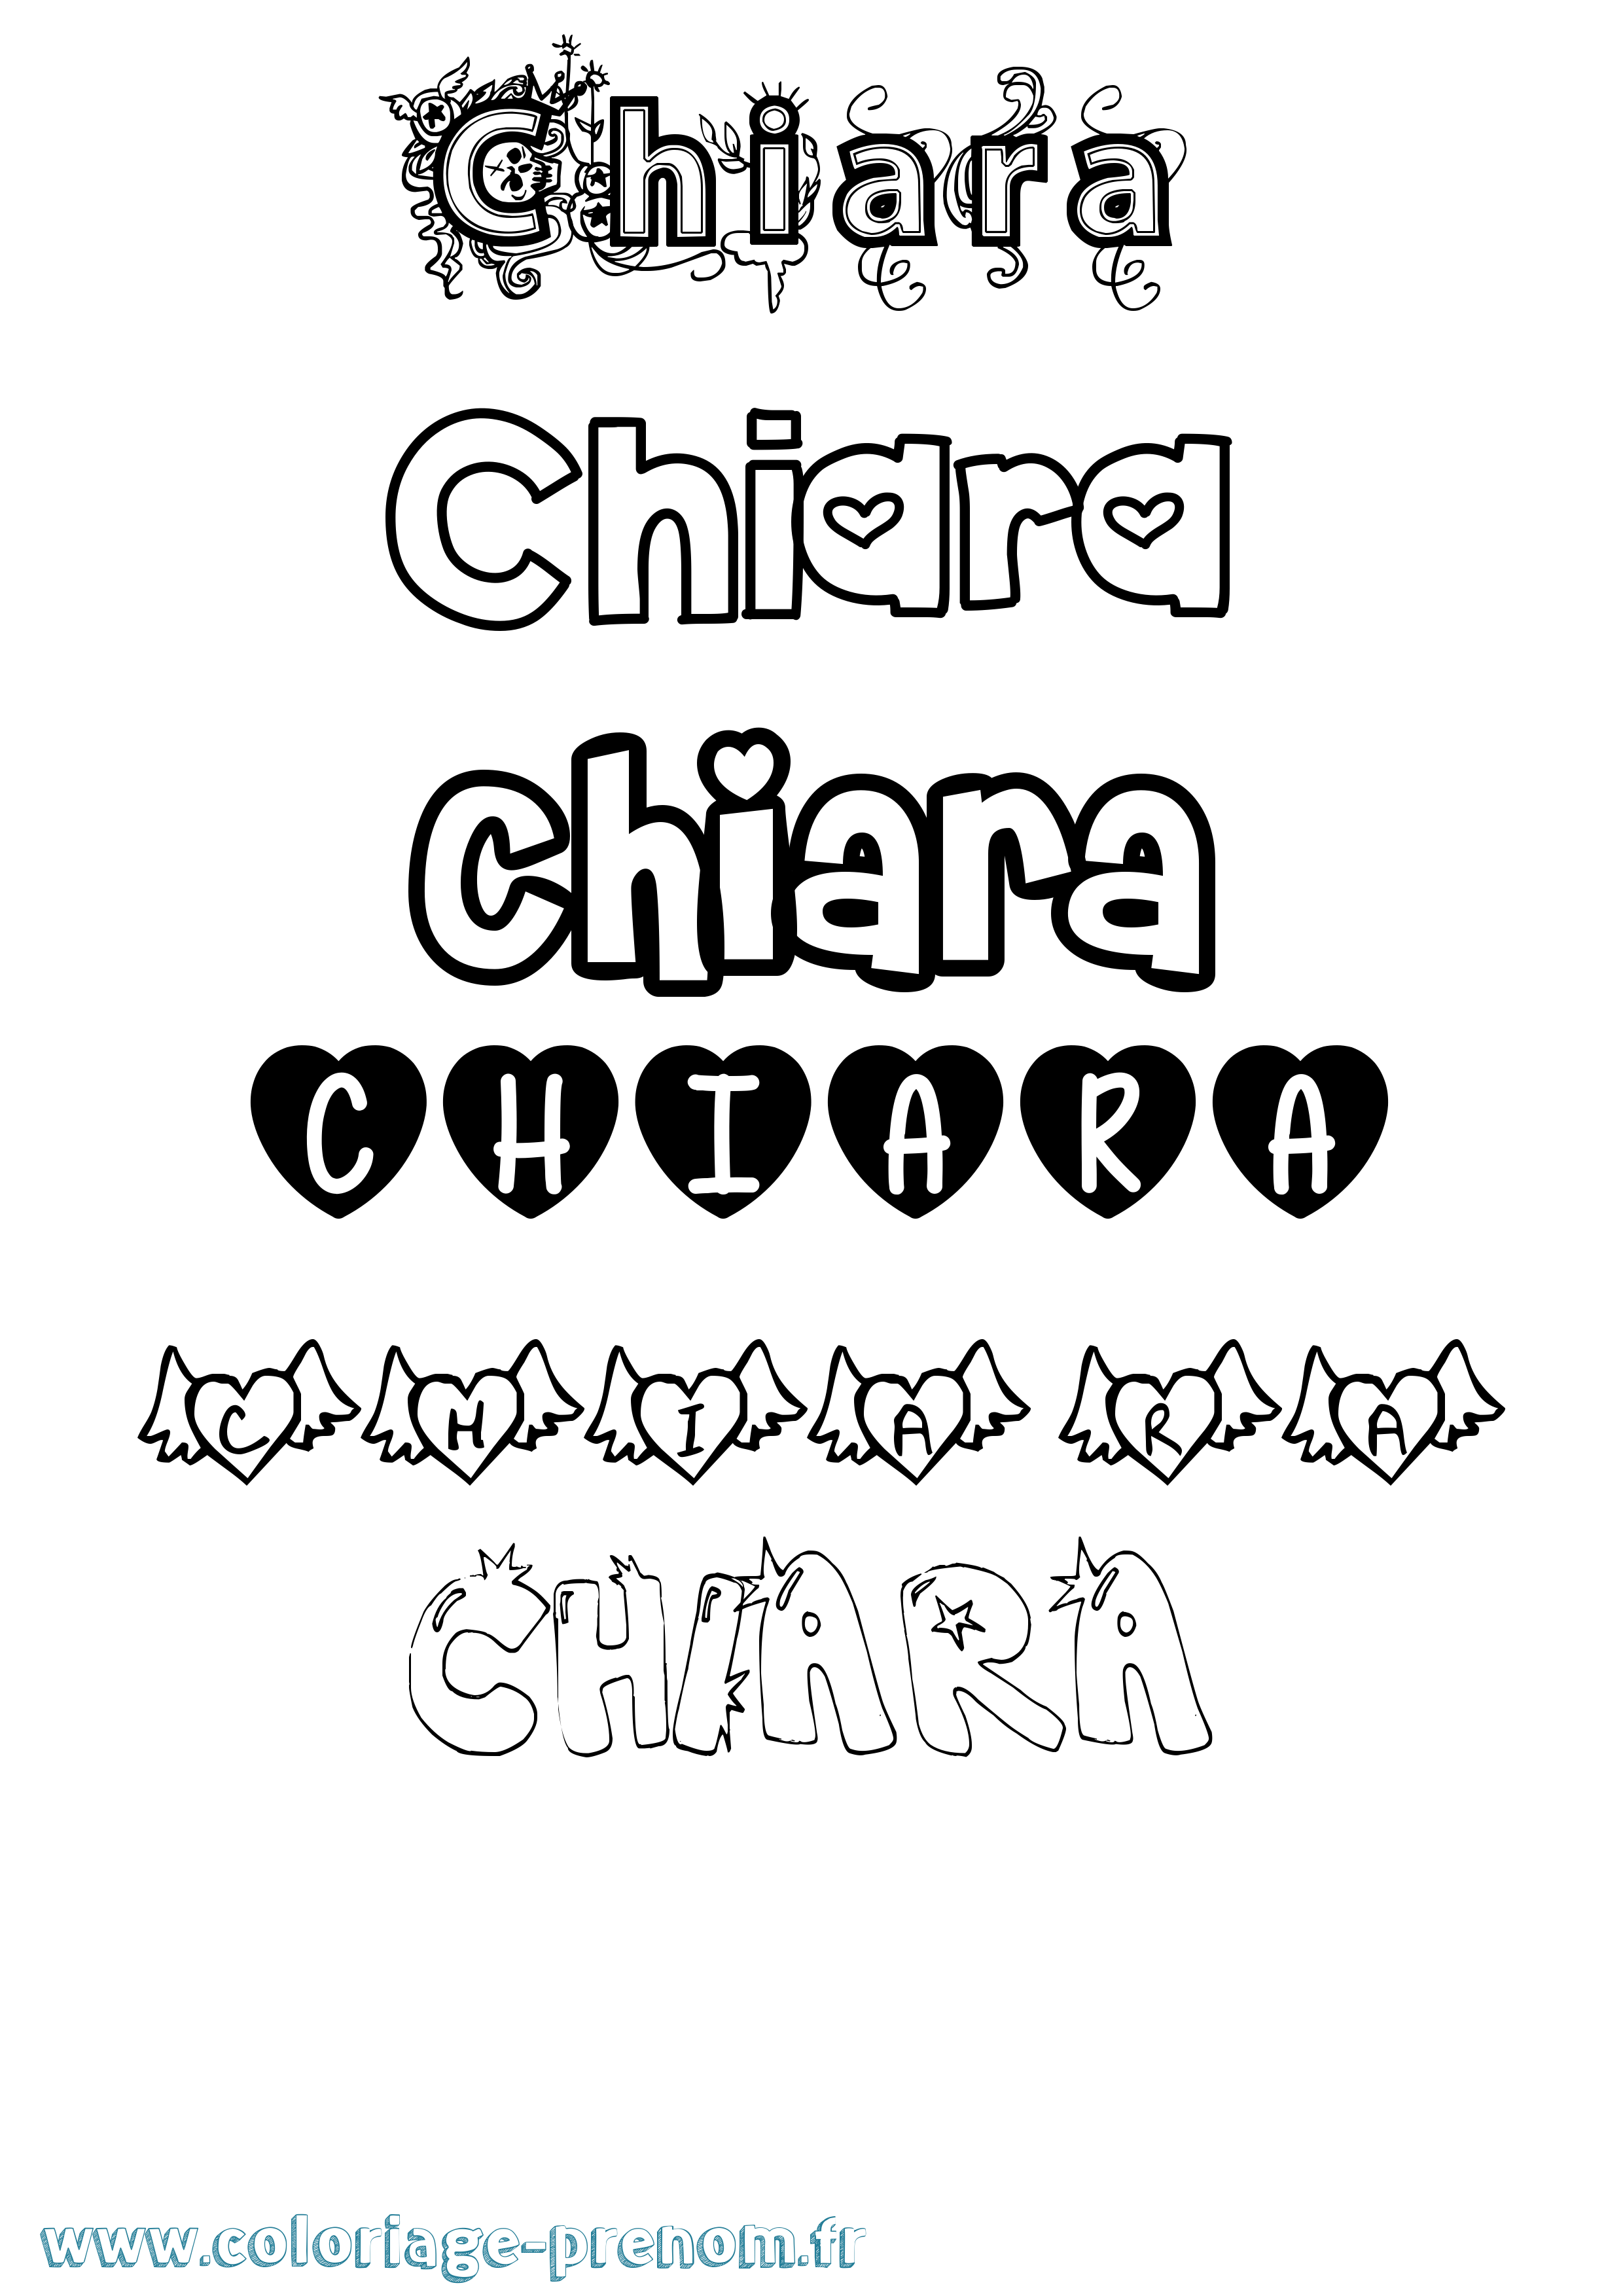 Coloriage prénom Chiara